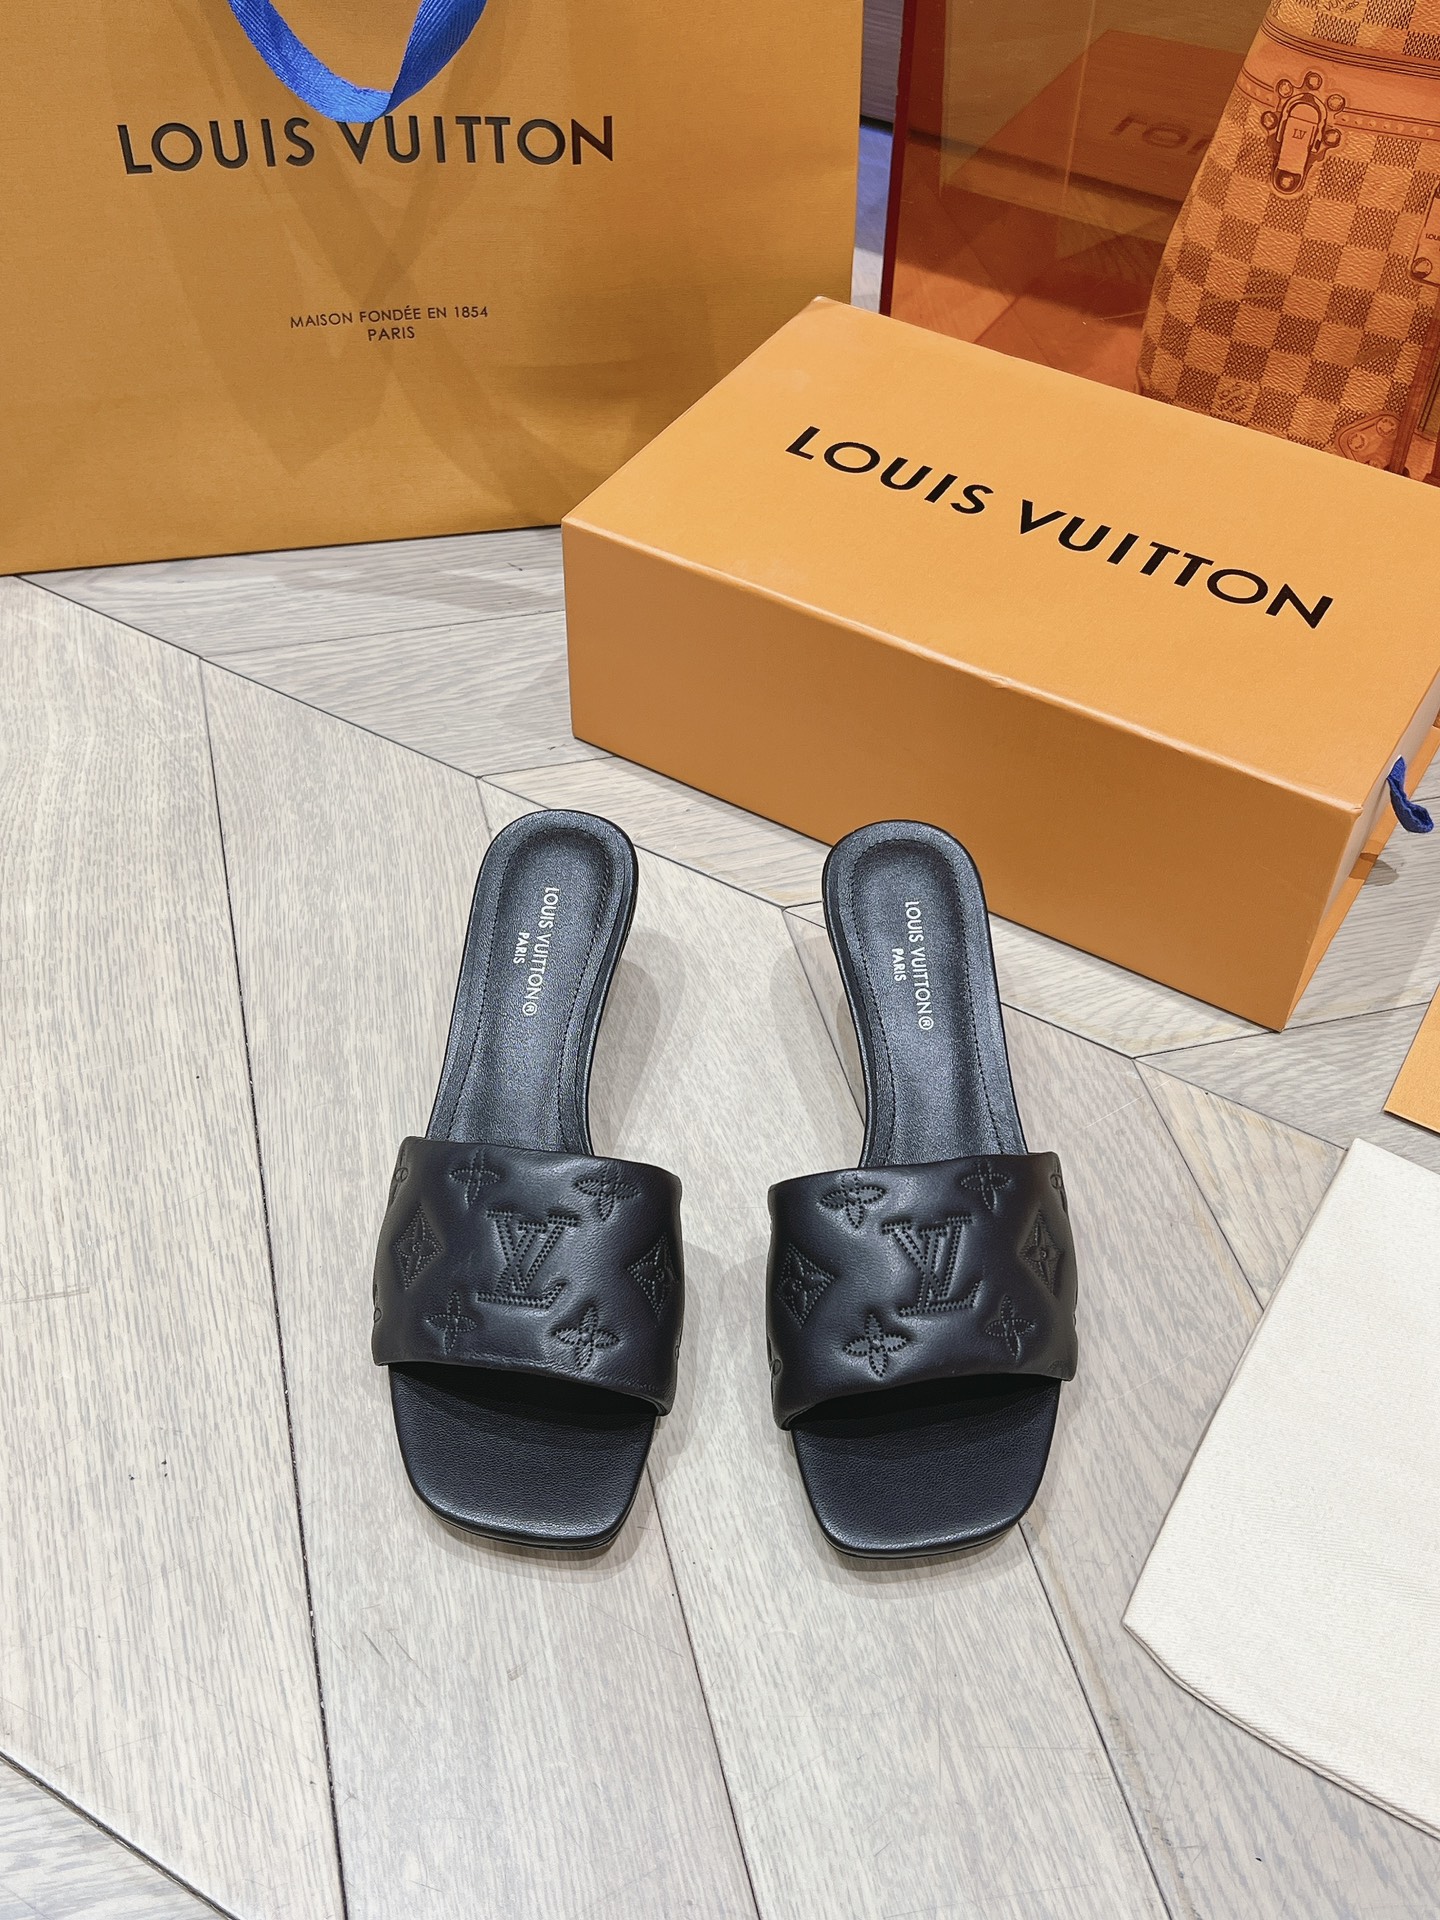 Louis Vuitton Shoes Slippers Genuine Leather Goat Skin Lambskin Sheepskin